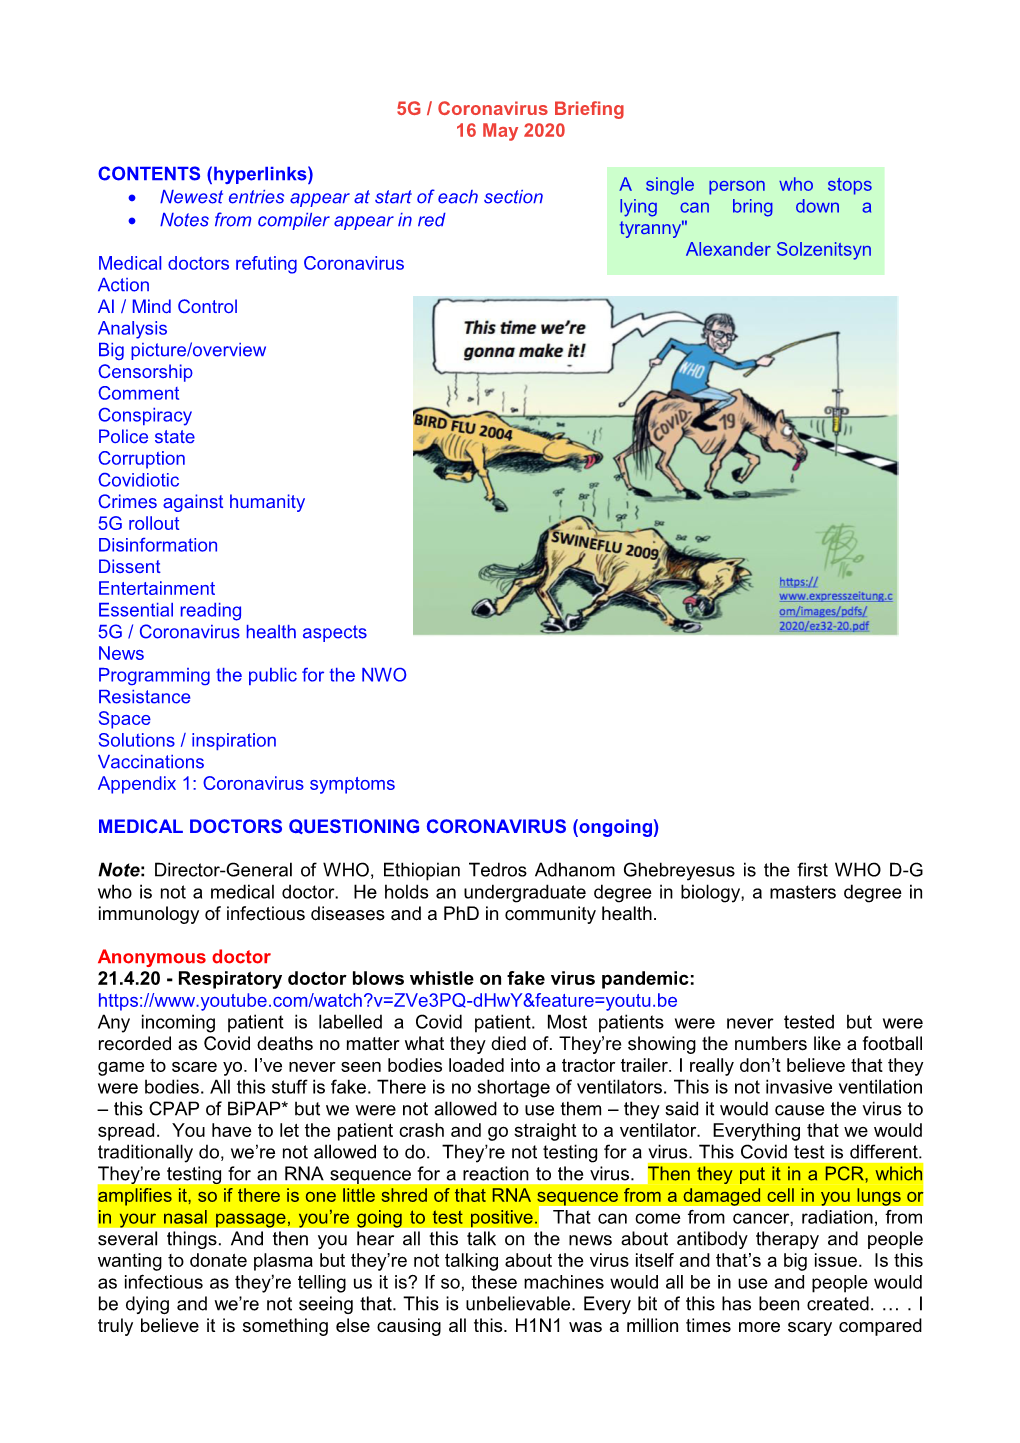 5G / Coronavirus Briefing 16 May 2020 CONTENTS (Hyperlinks)